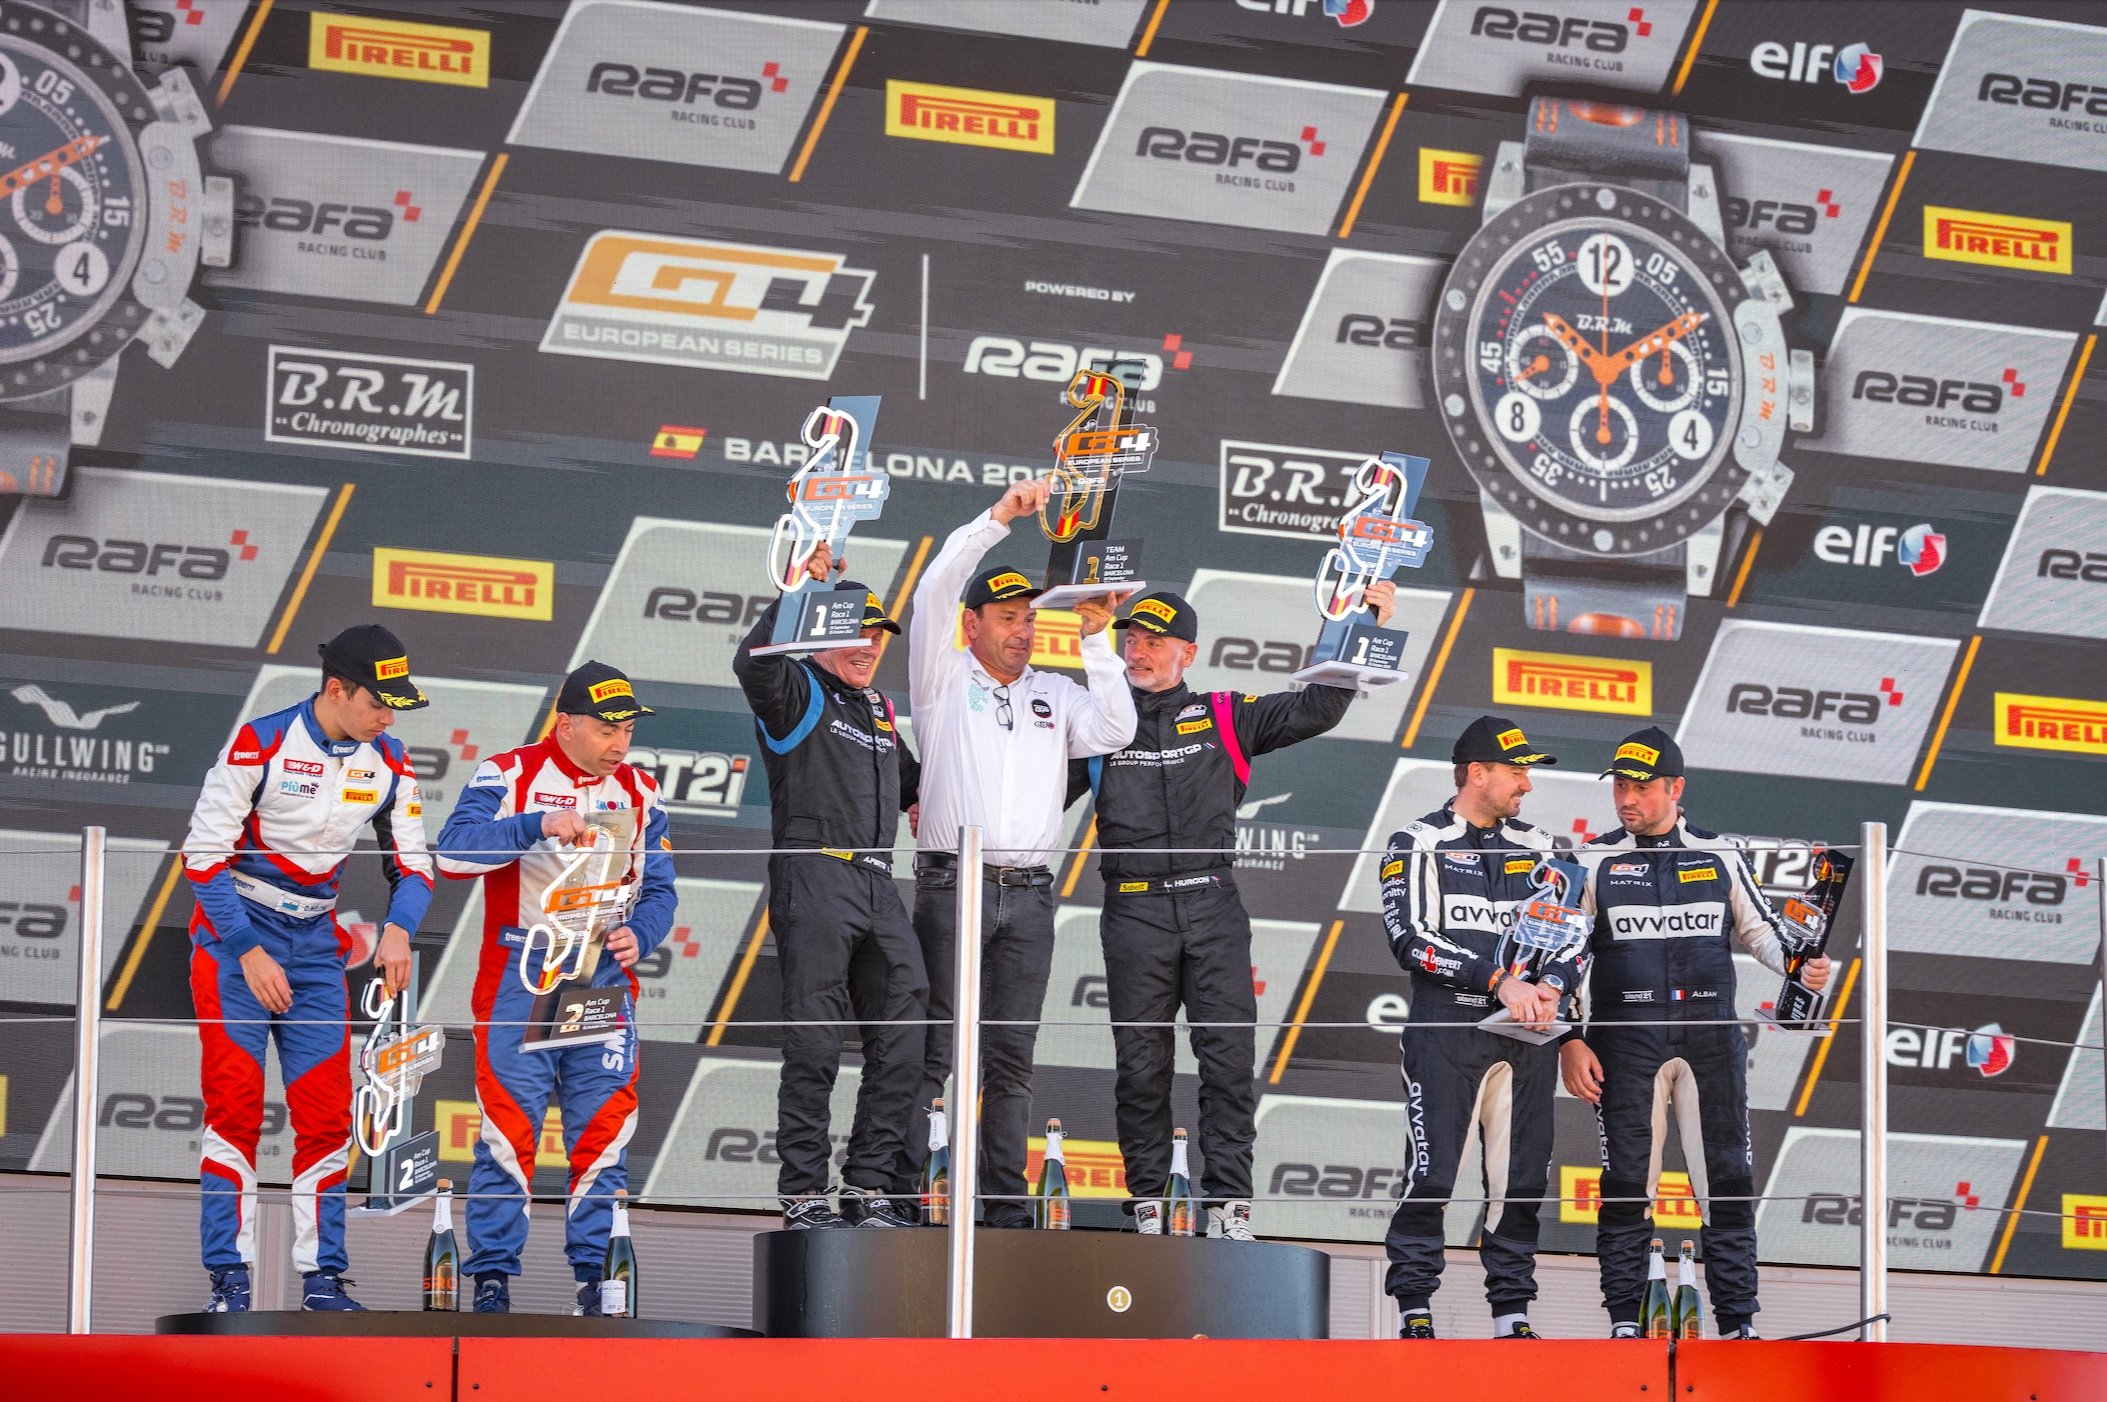 Barcelone+GT4+European+Series+podium.jpg